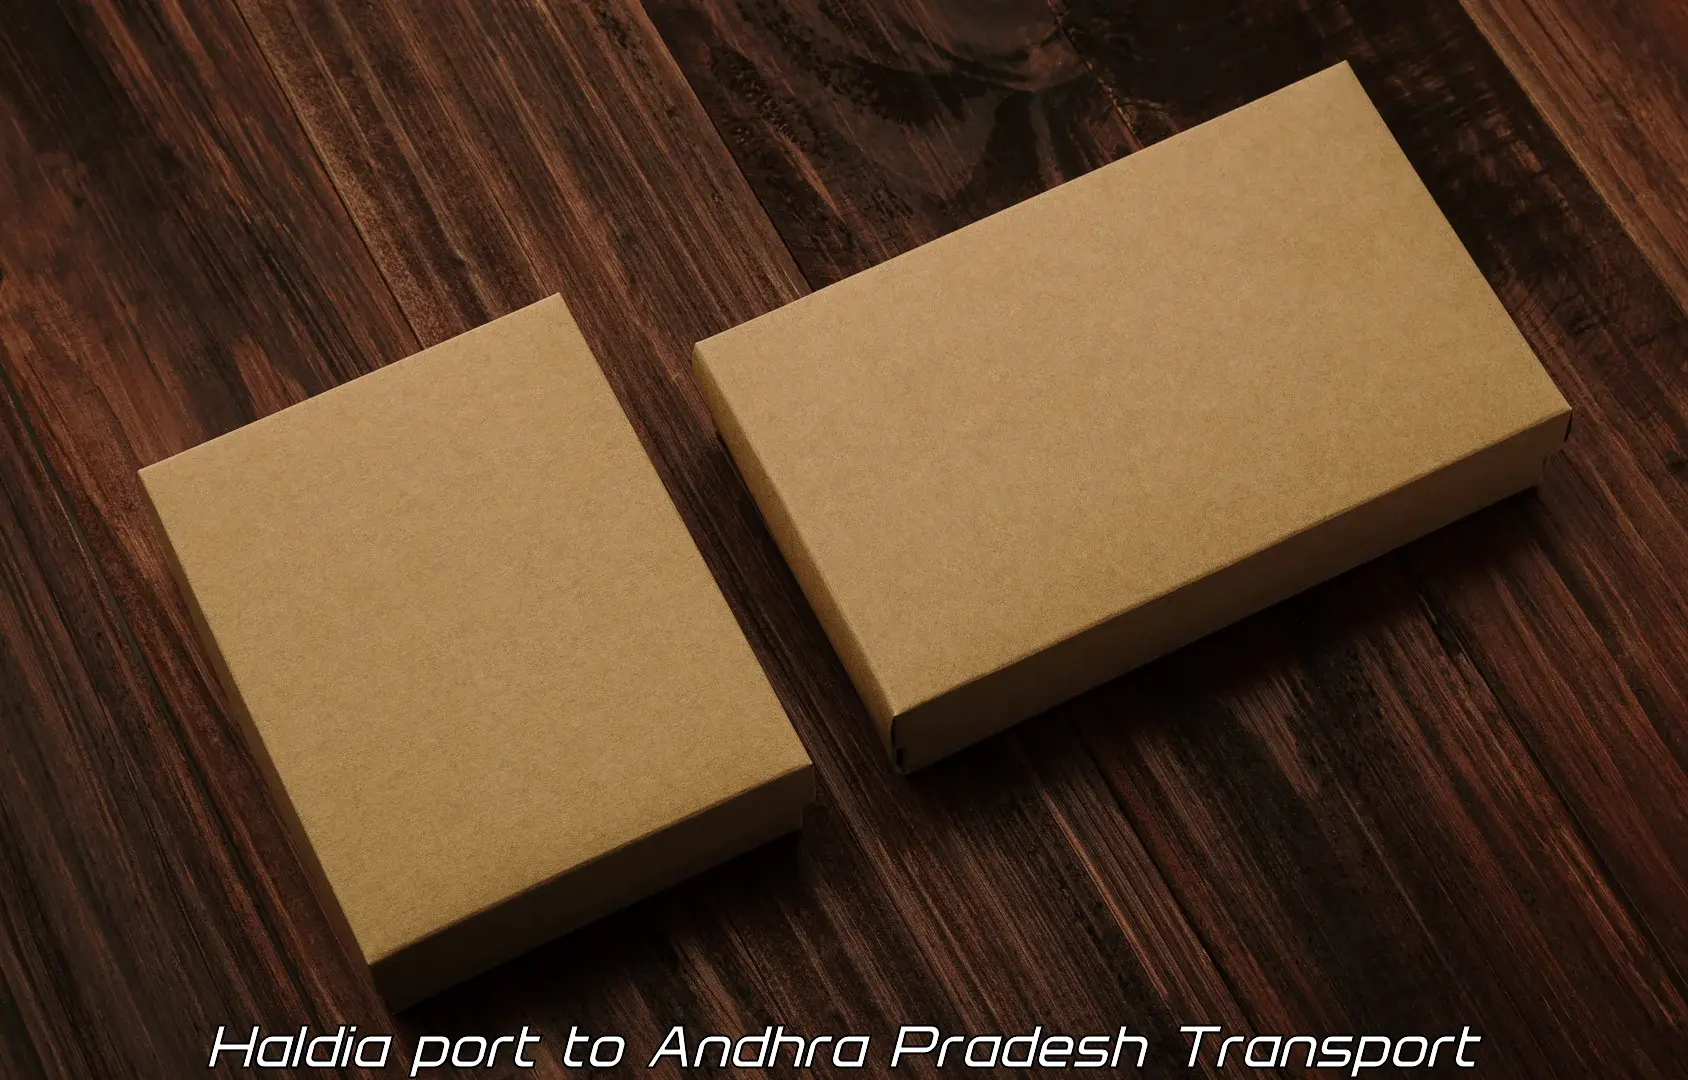 Nearby transport service Haldia port to Andhra Pradesh